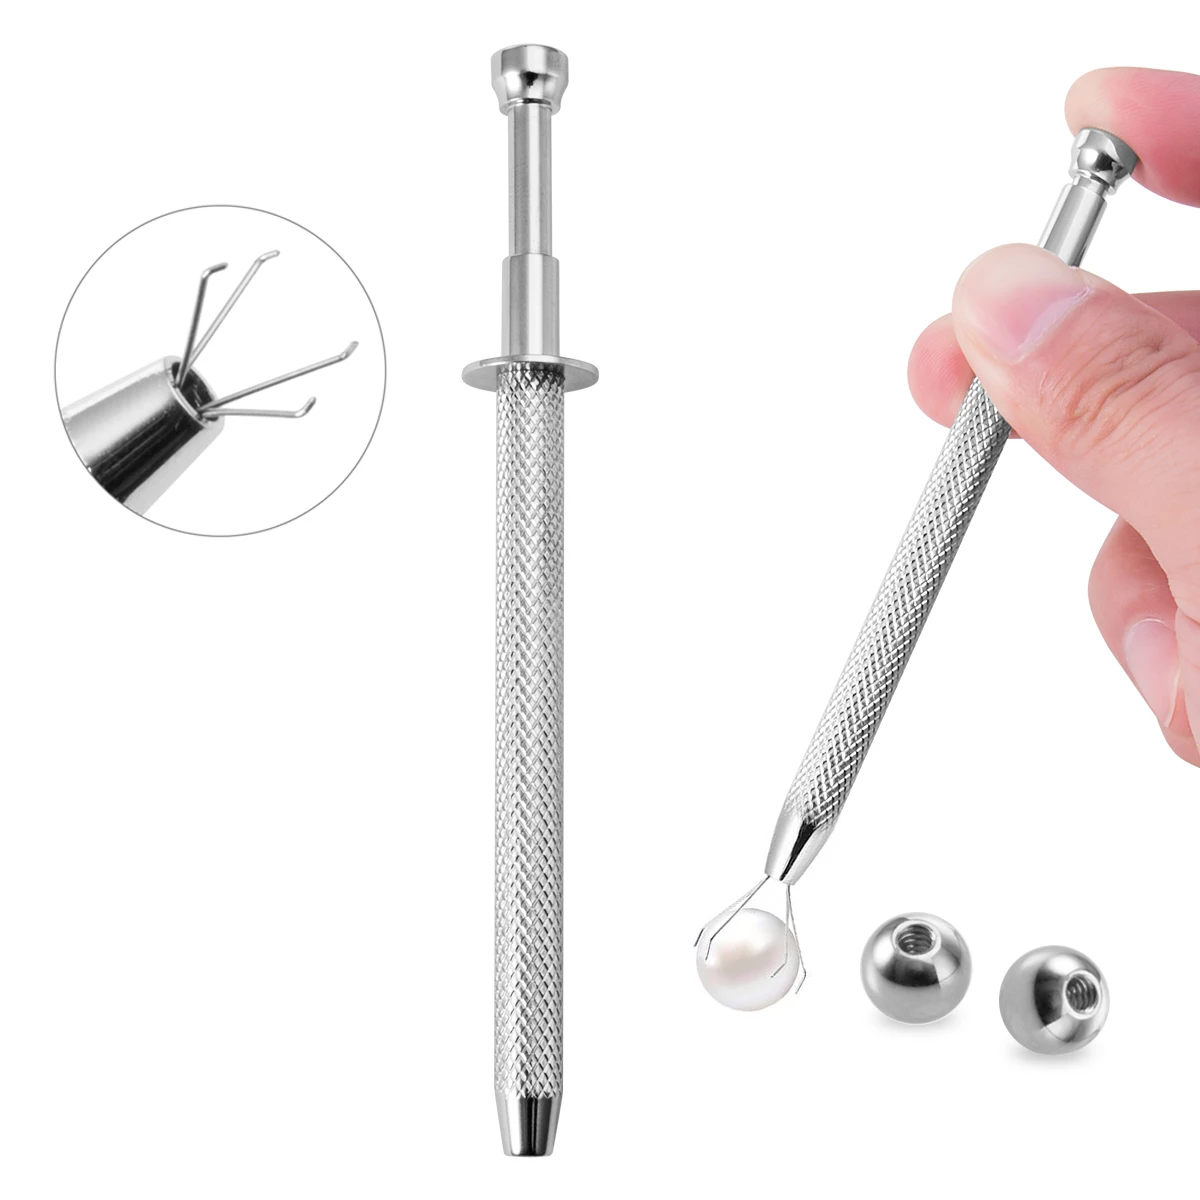 https://ae01.alicdn.com/kf/H89057e492e15471198897c23a05bb353L/1pc-Surgical-Steel-Body-Piercing-Plier-Clamp-Different-Open-Shape-Tweezers-Forceps-Professional-Navel-Nose-Septum.jpg